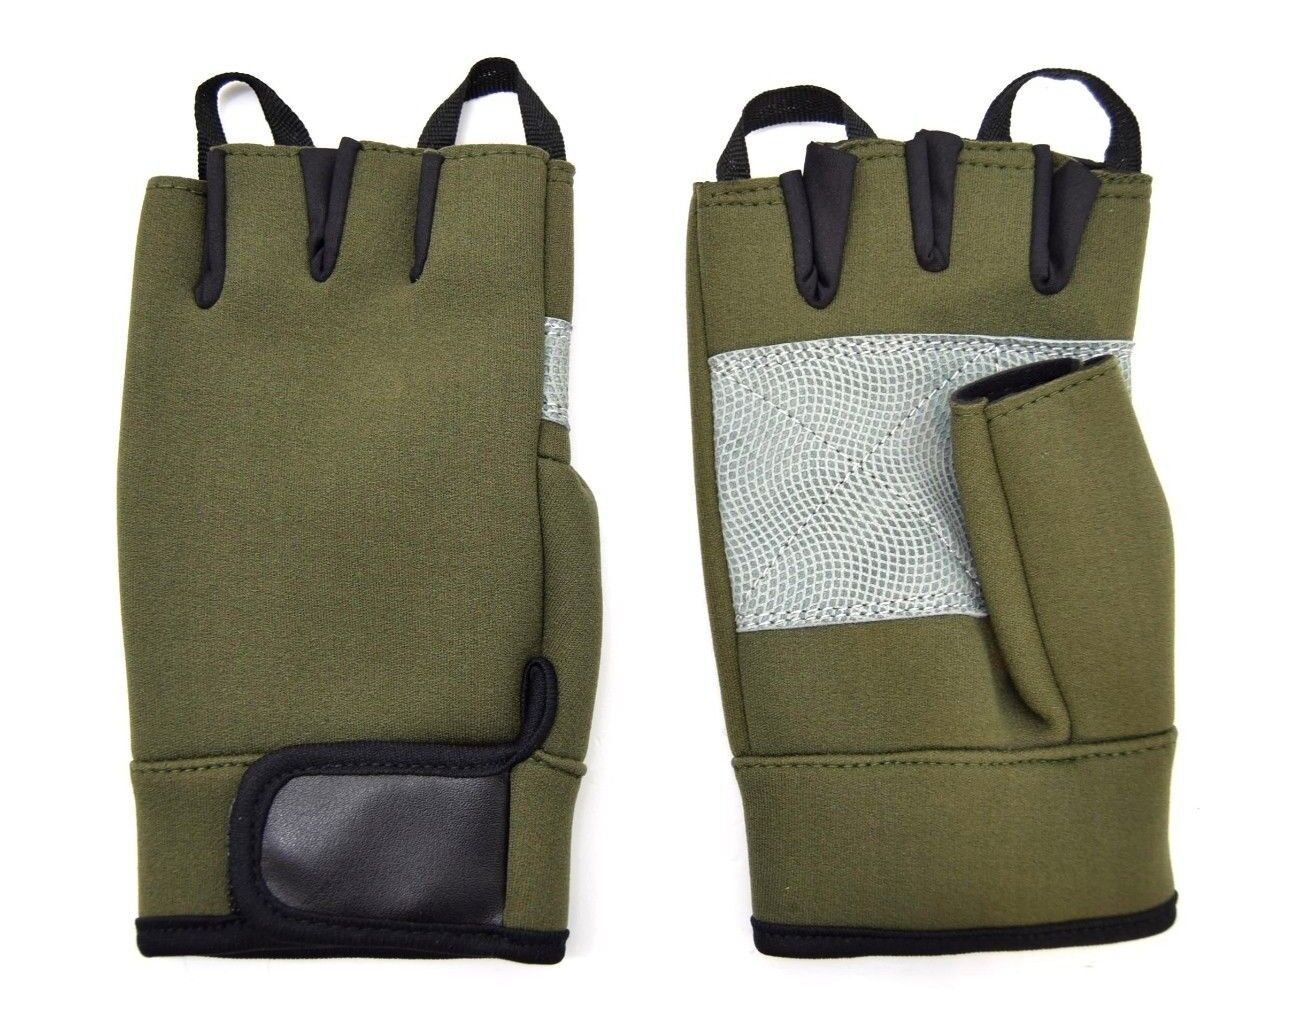 Fingerless Neoprene Gloves Olive Green Cycling Handling Tactical Army Work Sport